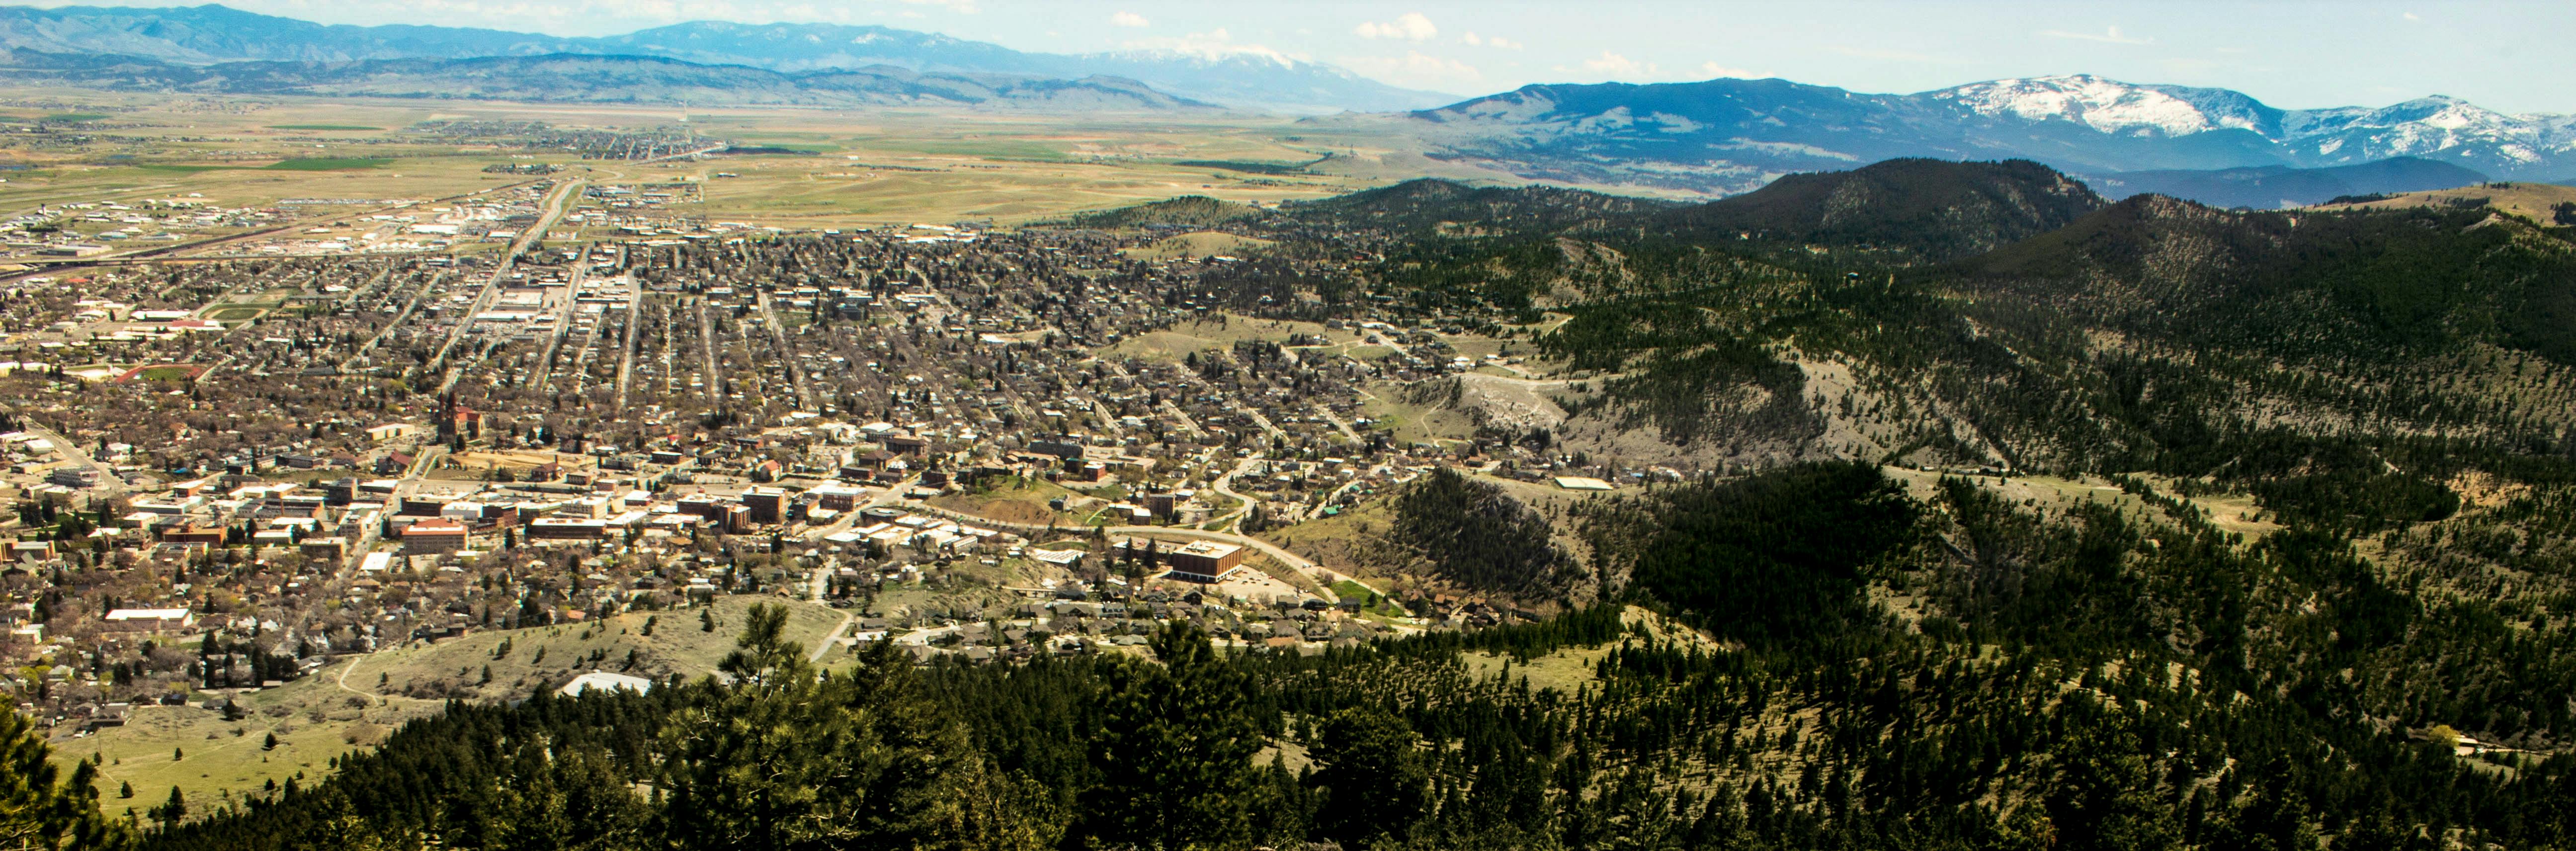 Free stock photo of helena montana, mountains, overlooking city